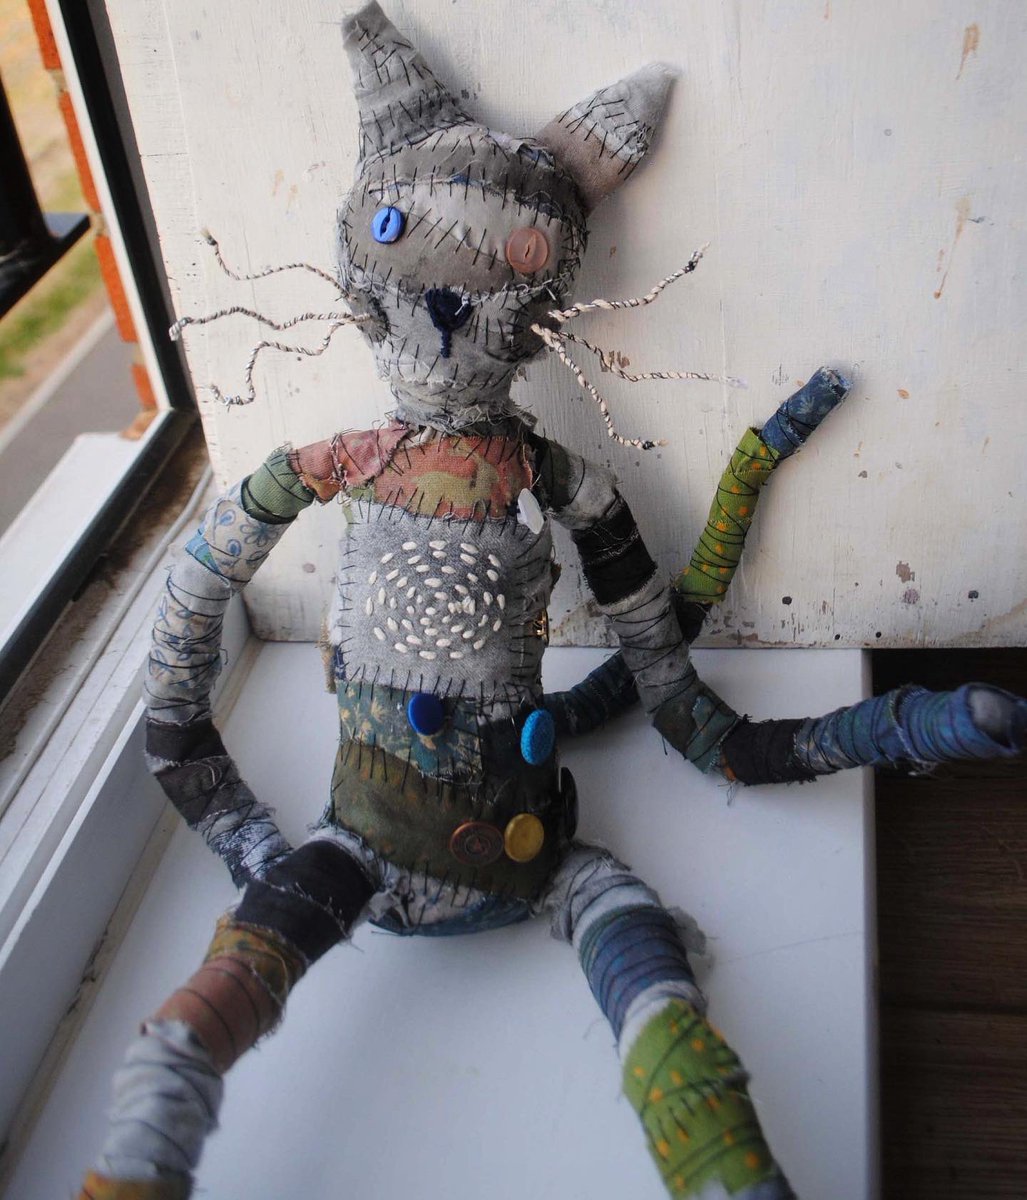 My finished slender cat doll, ‘Kellen’ 

.. 

#catdoll #skinnycat #artdoll #handmadedoll #folkart  #textilesculpture #textileart